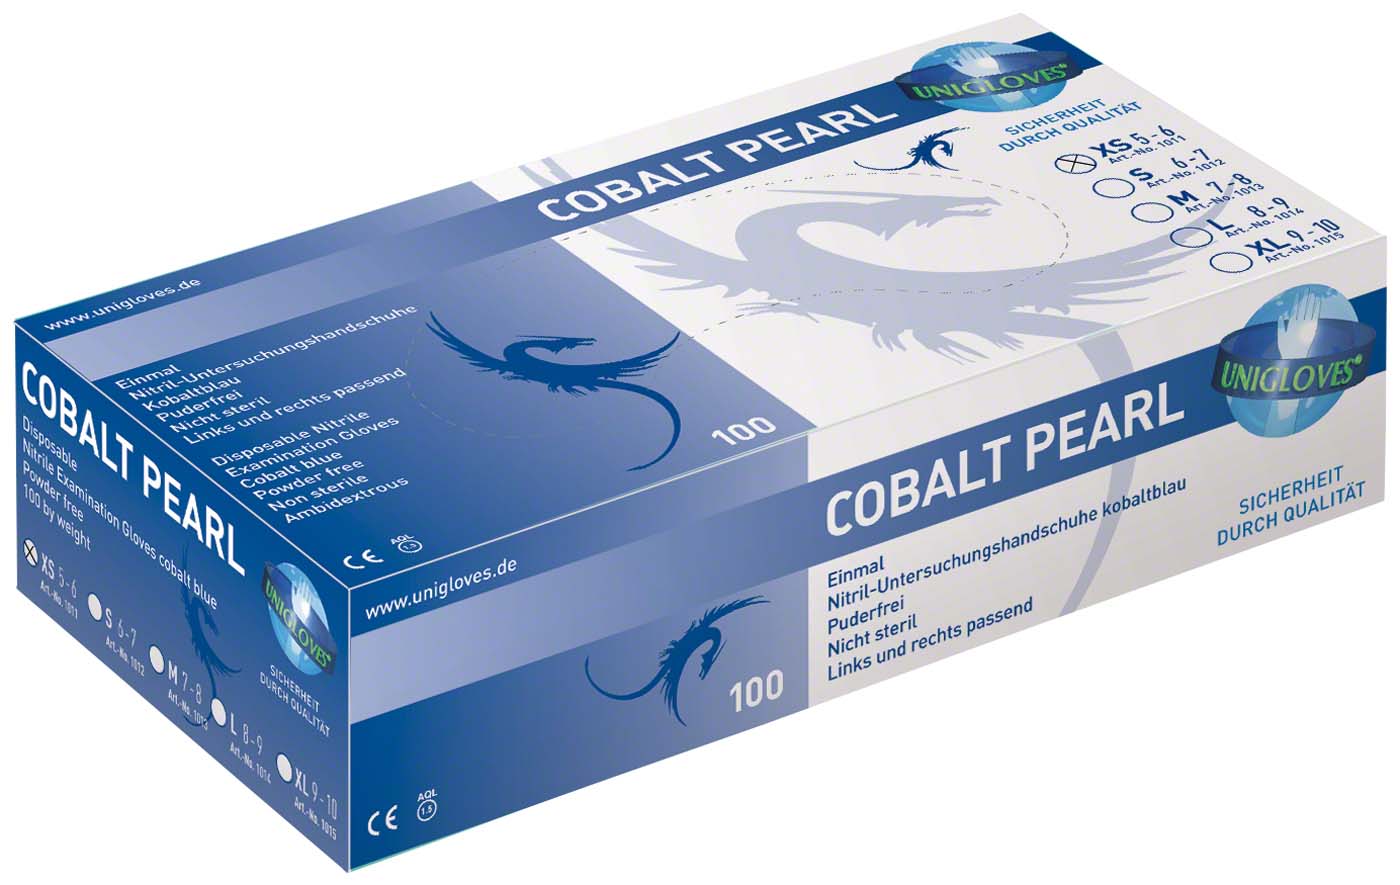 COBALT PEARL Unigloves